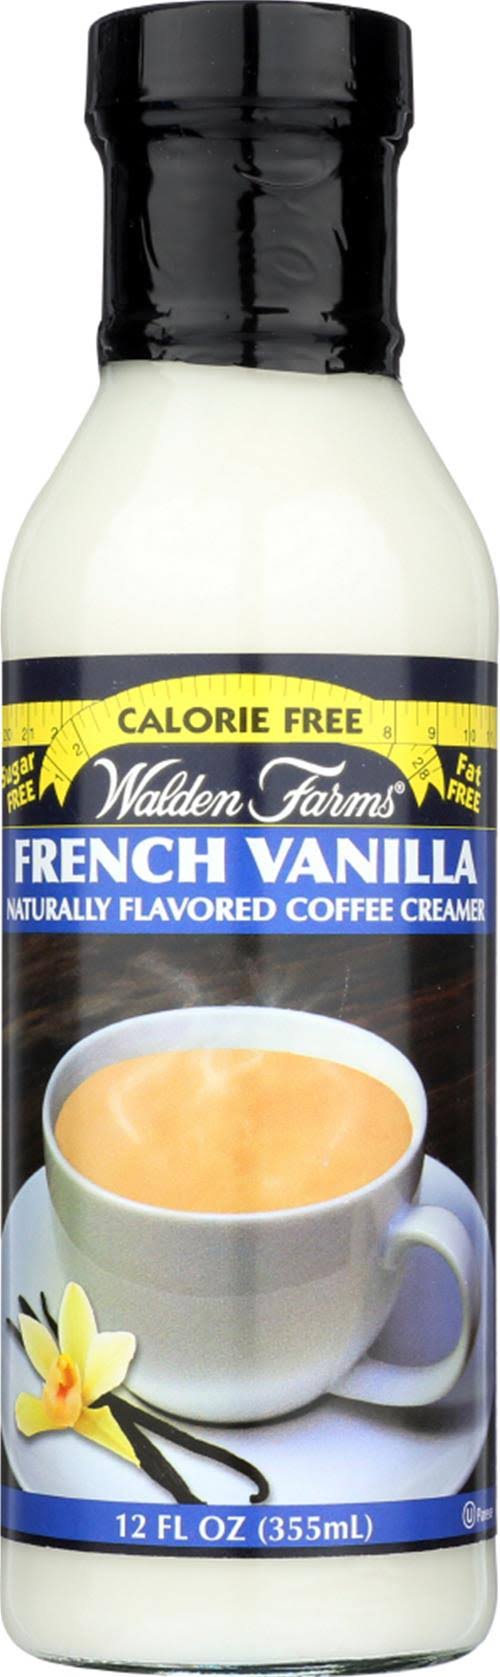 Walden Farms Naturally Flavored Coffee Creamer - French Vanilla, 355ml